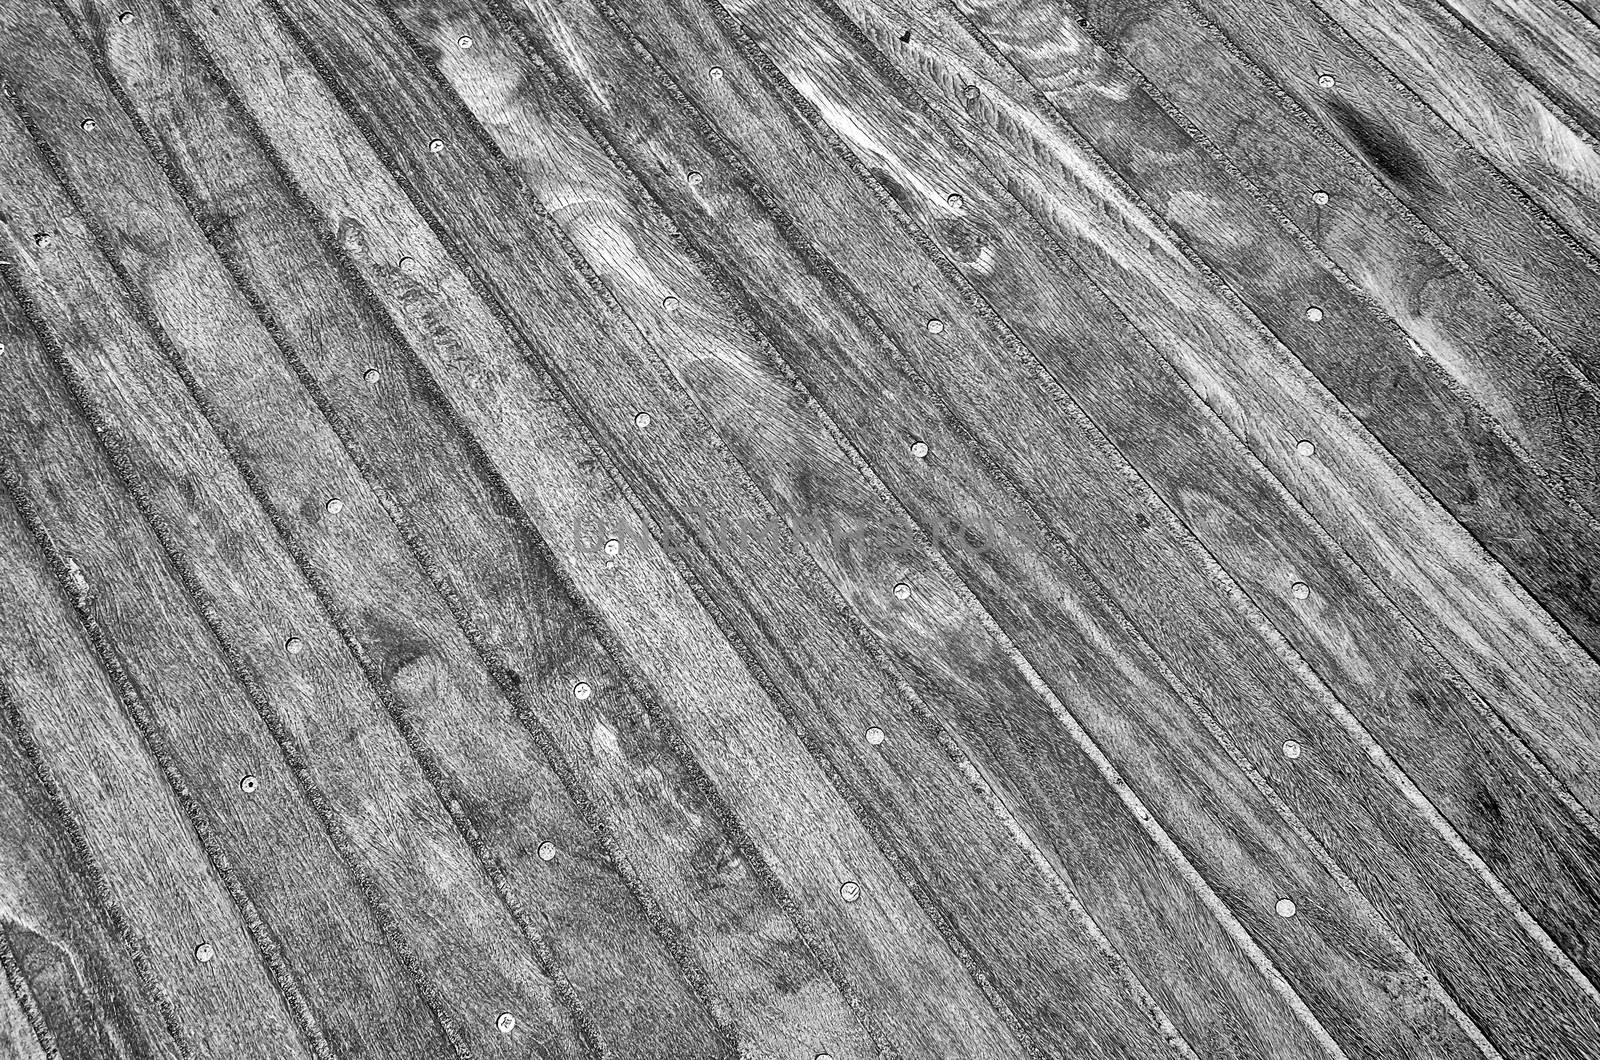 Wooden Boardwalk Background by marcorubino